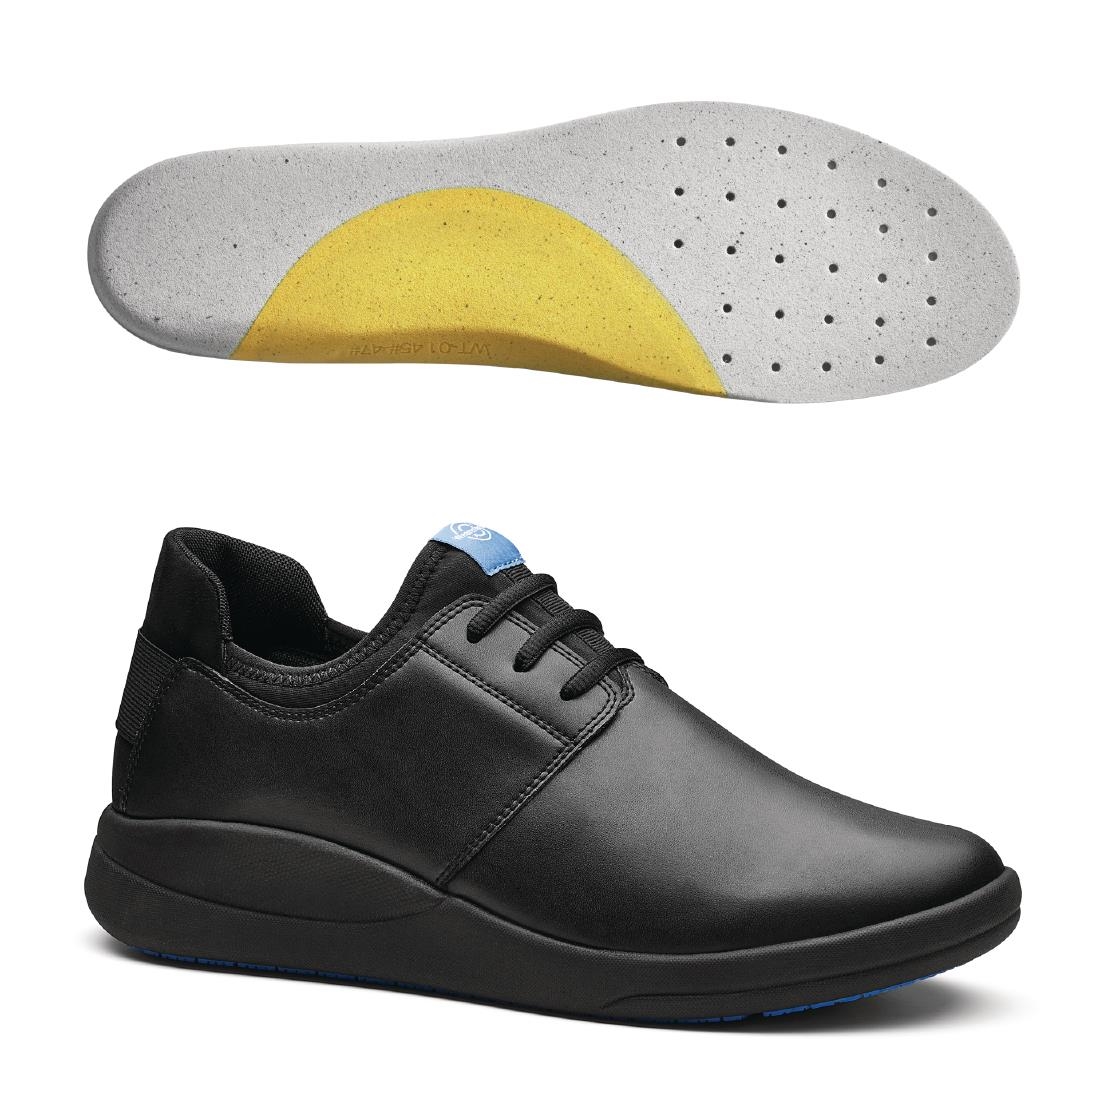 WearerTech Relieve Shoe Black with Soft Insoles Size 44-45